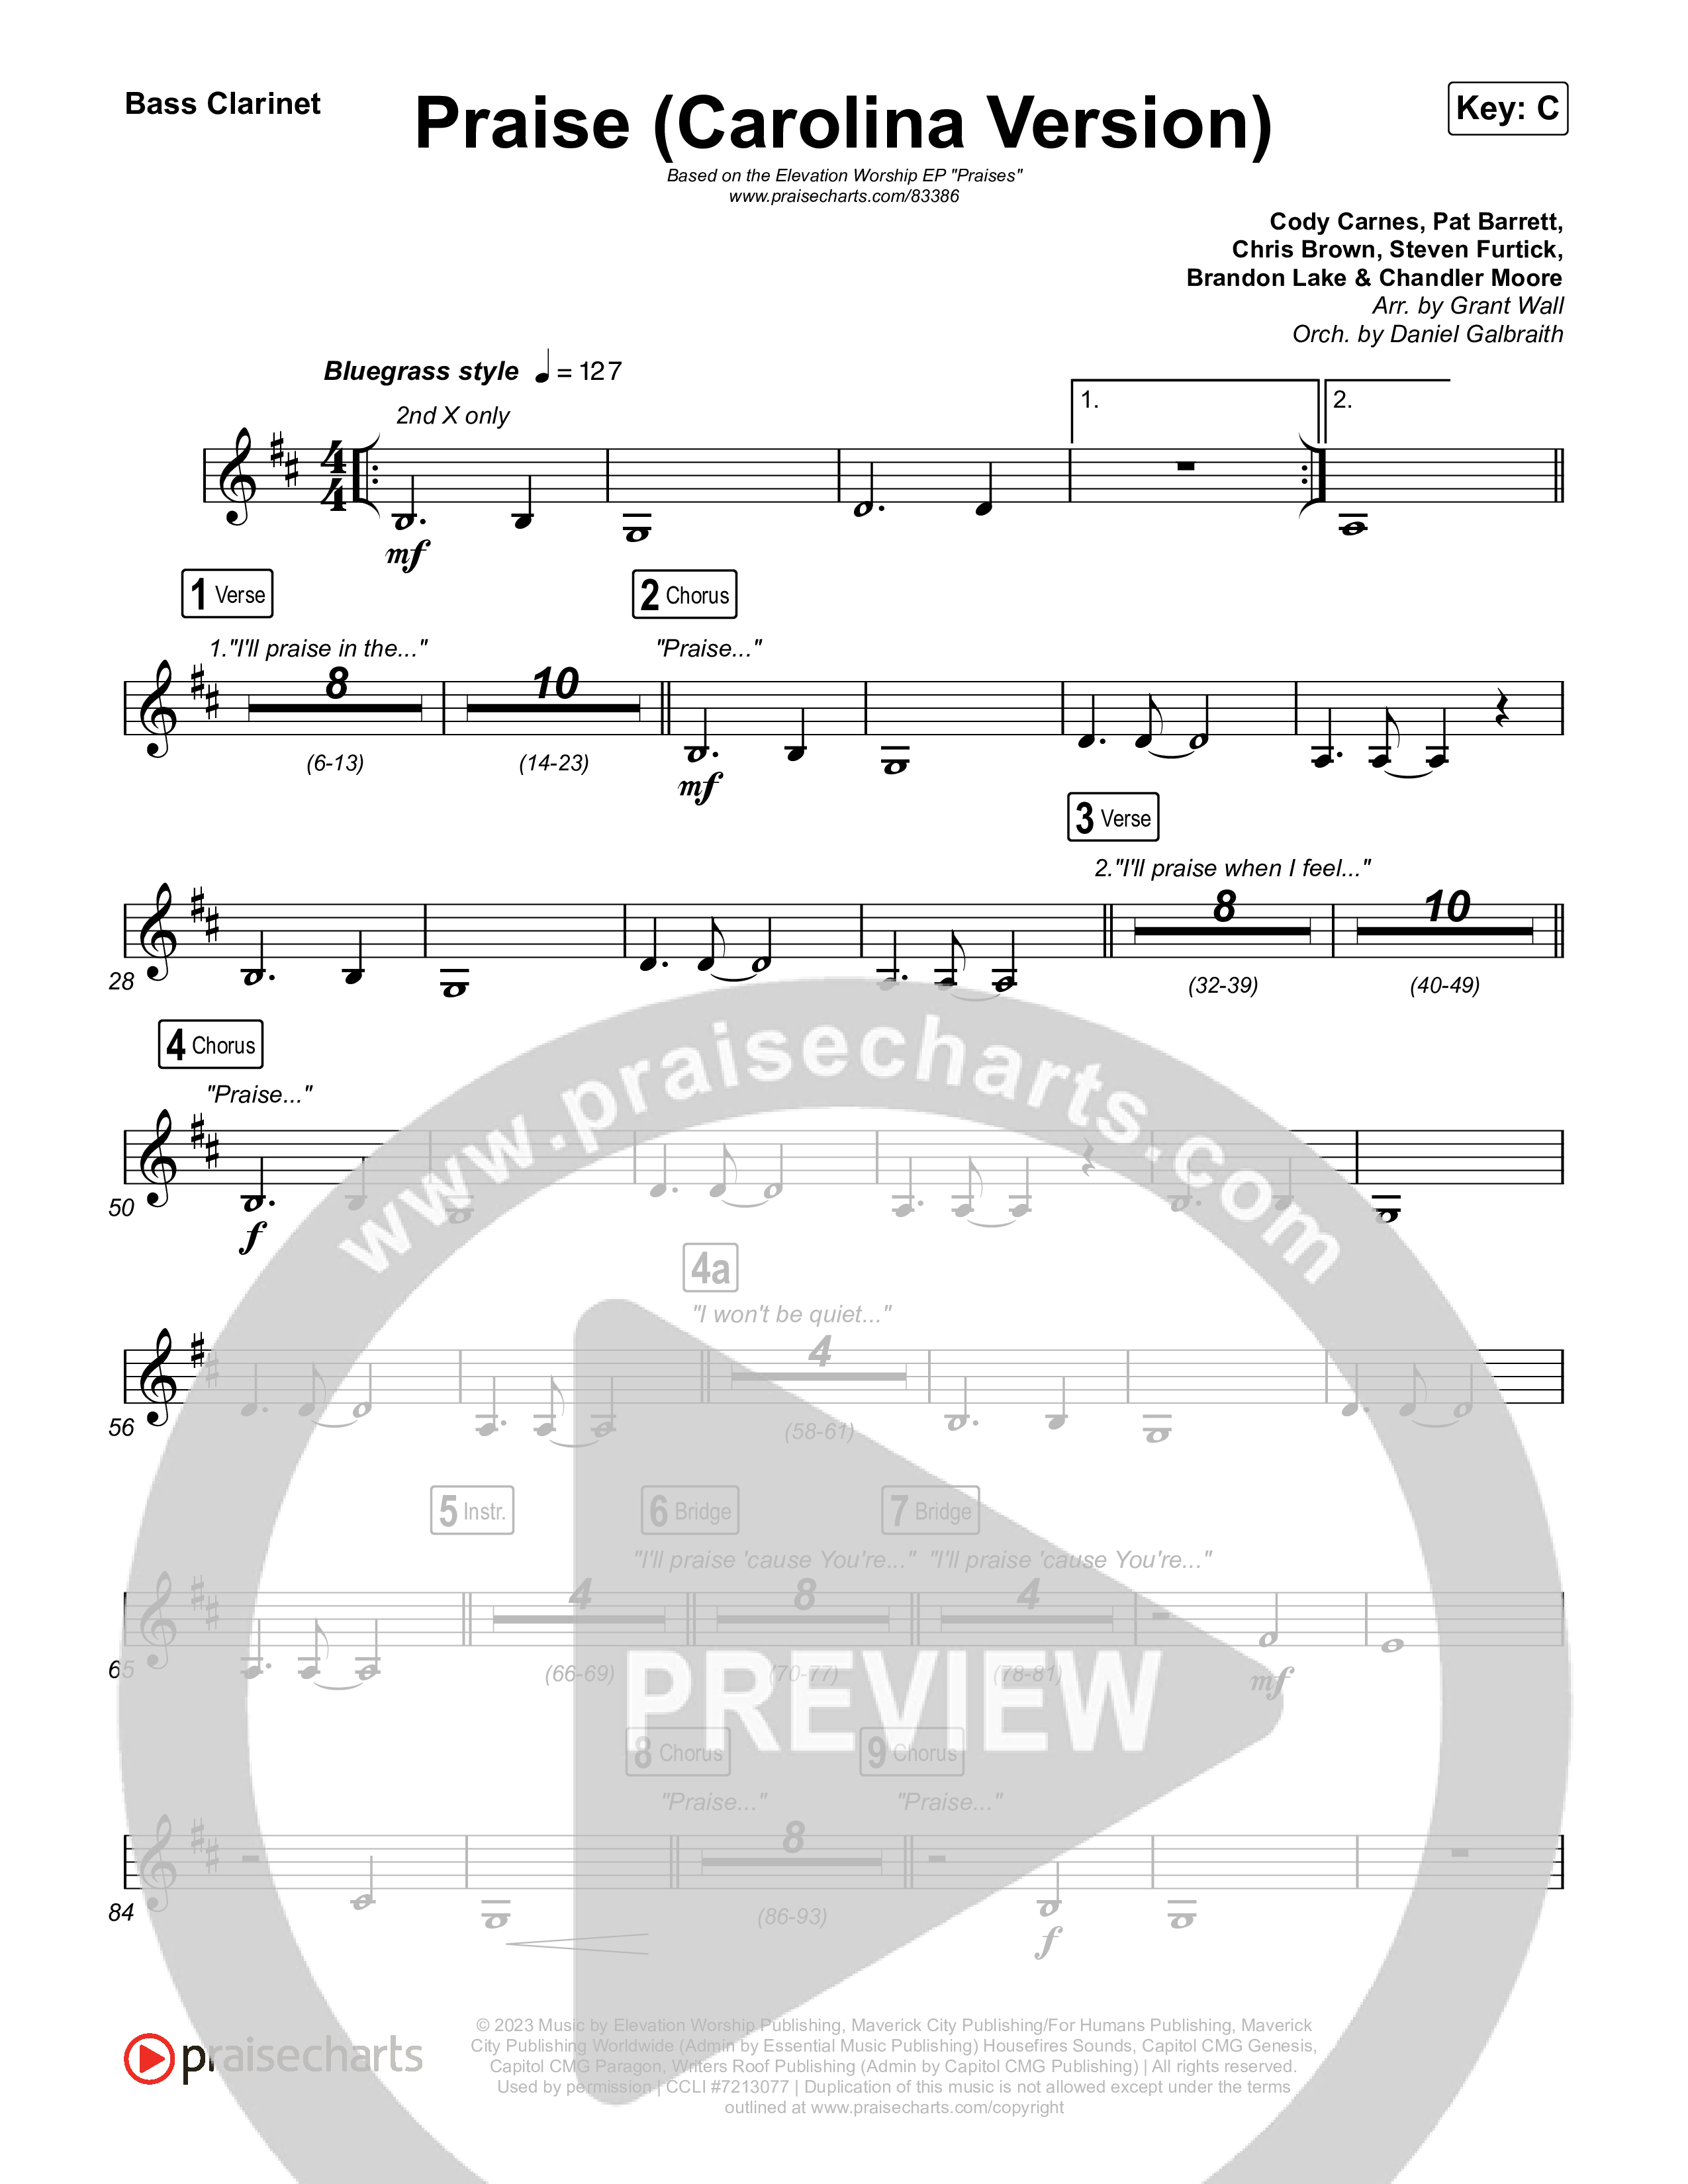 Praise (Carolina Version) Bass Clarinet (Elevation Worship)